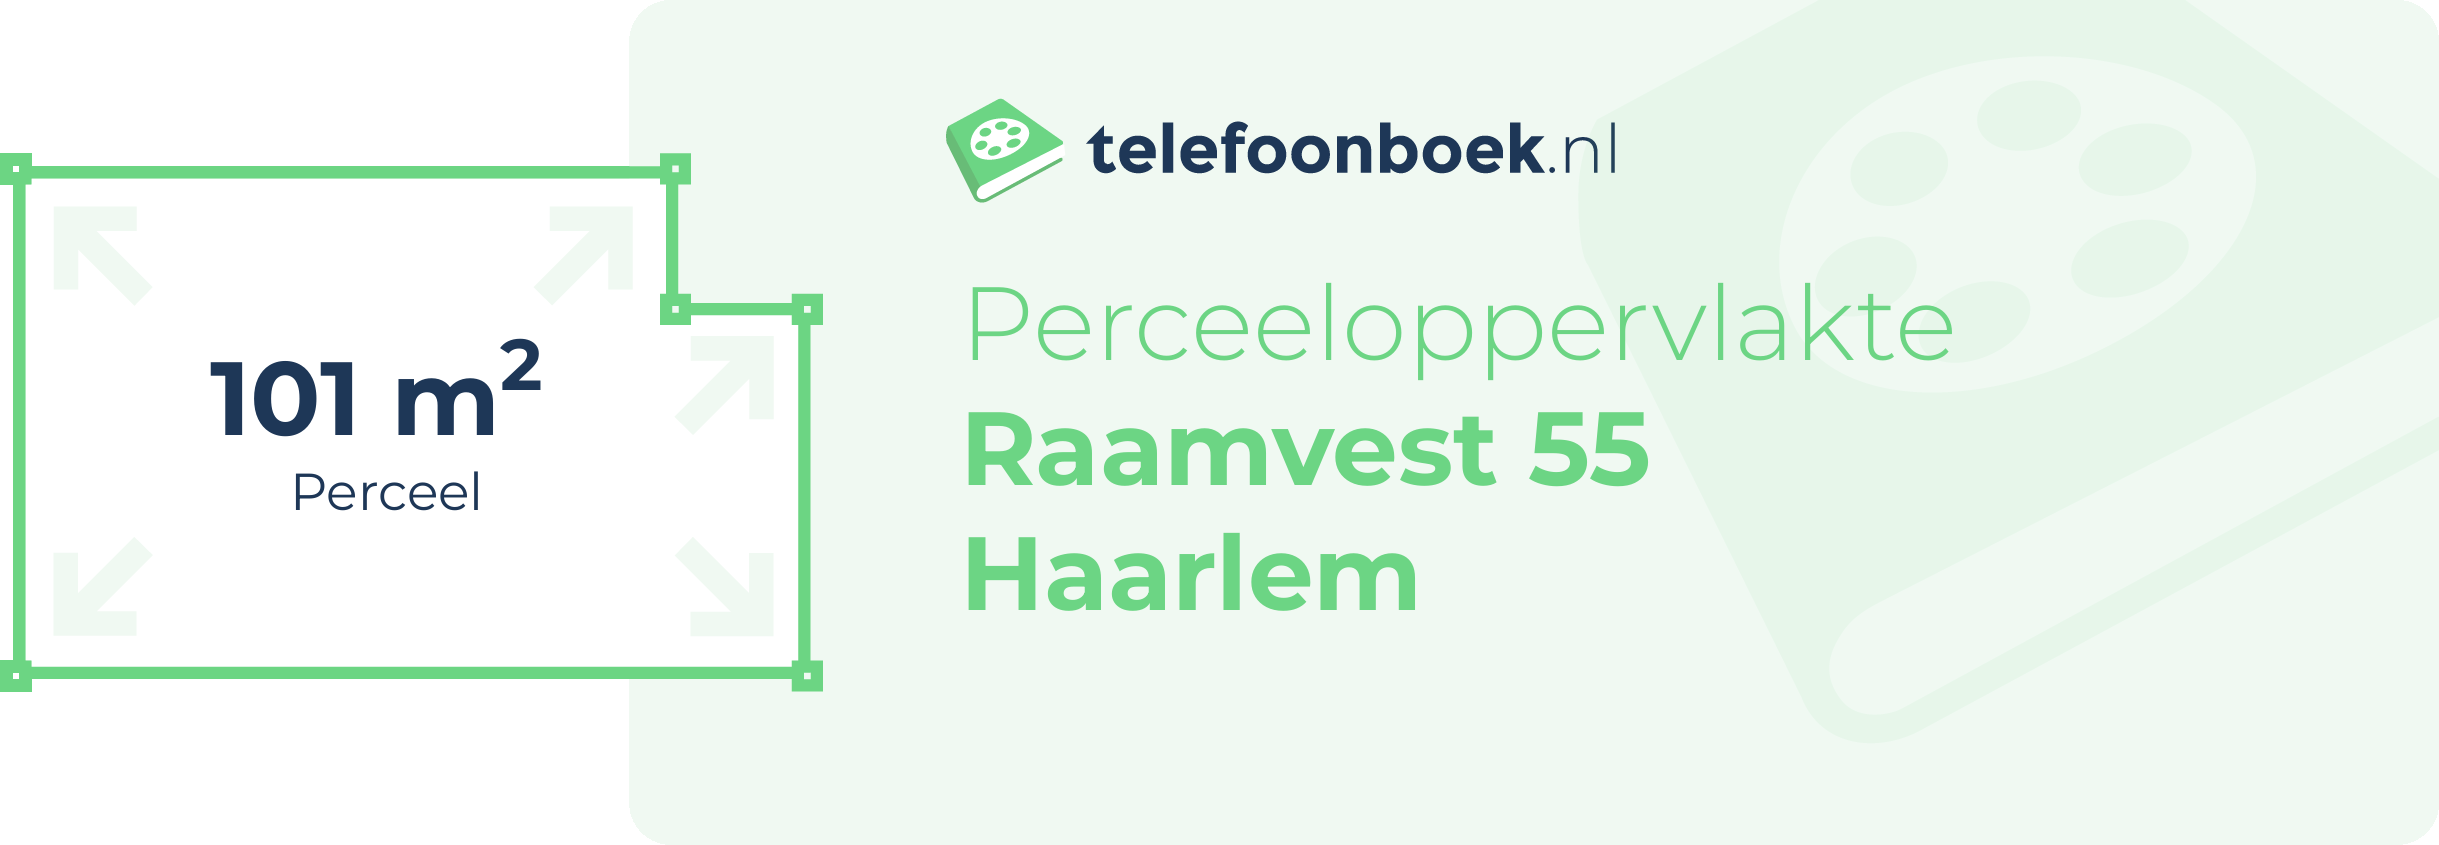 Perceeloppervlakte Raamvest 55 Haarlem